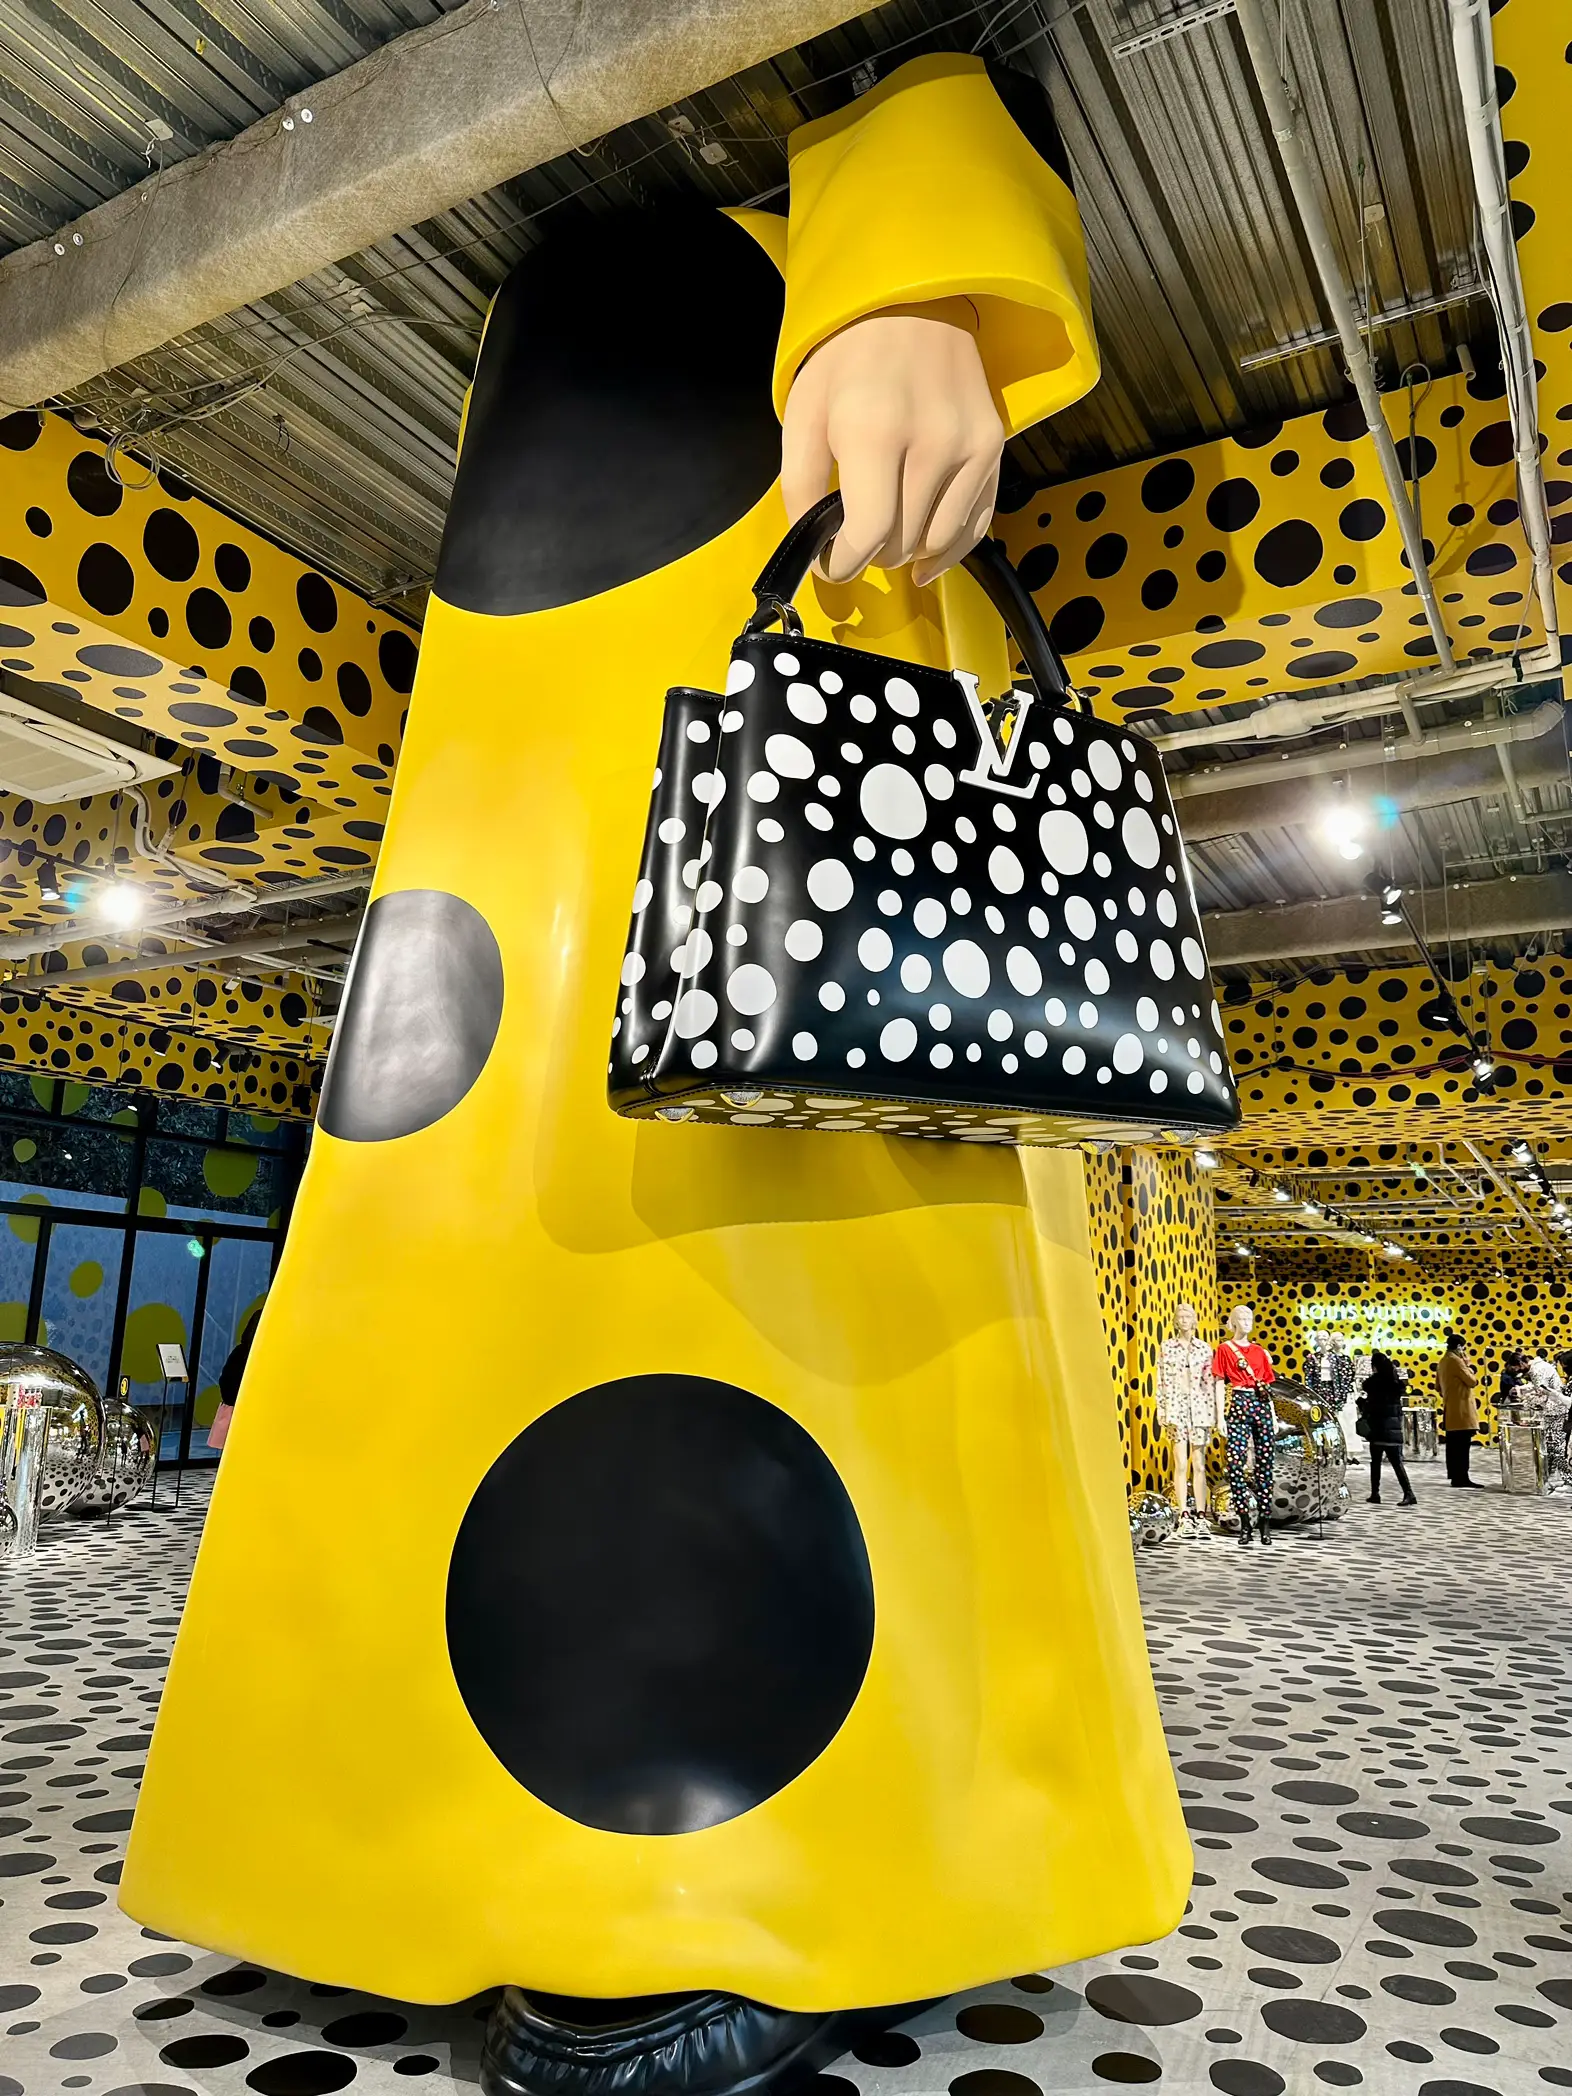 Louis Vuitton and Yayoi Kusama pop-up store in Harajuku - Japan by web